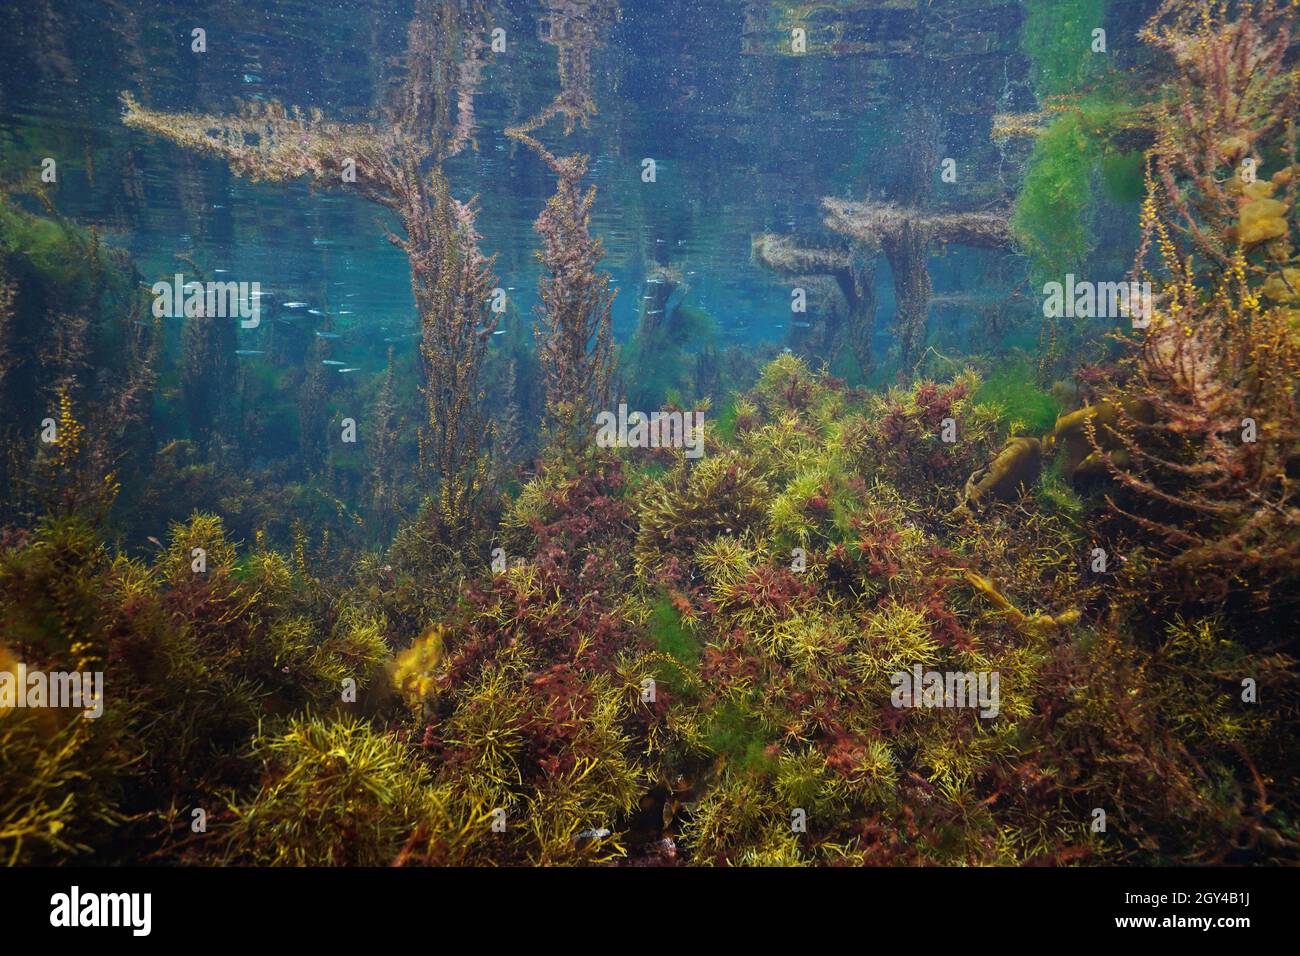 Dense growth of algae in shallow water in the ocean, underwater scene, Eastern Atlantic, Spain, Galicia Stock Photo